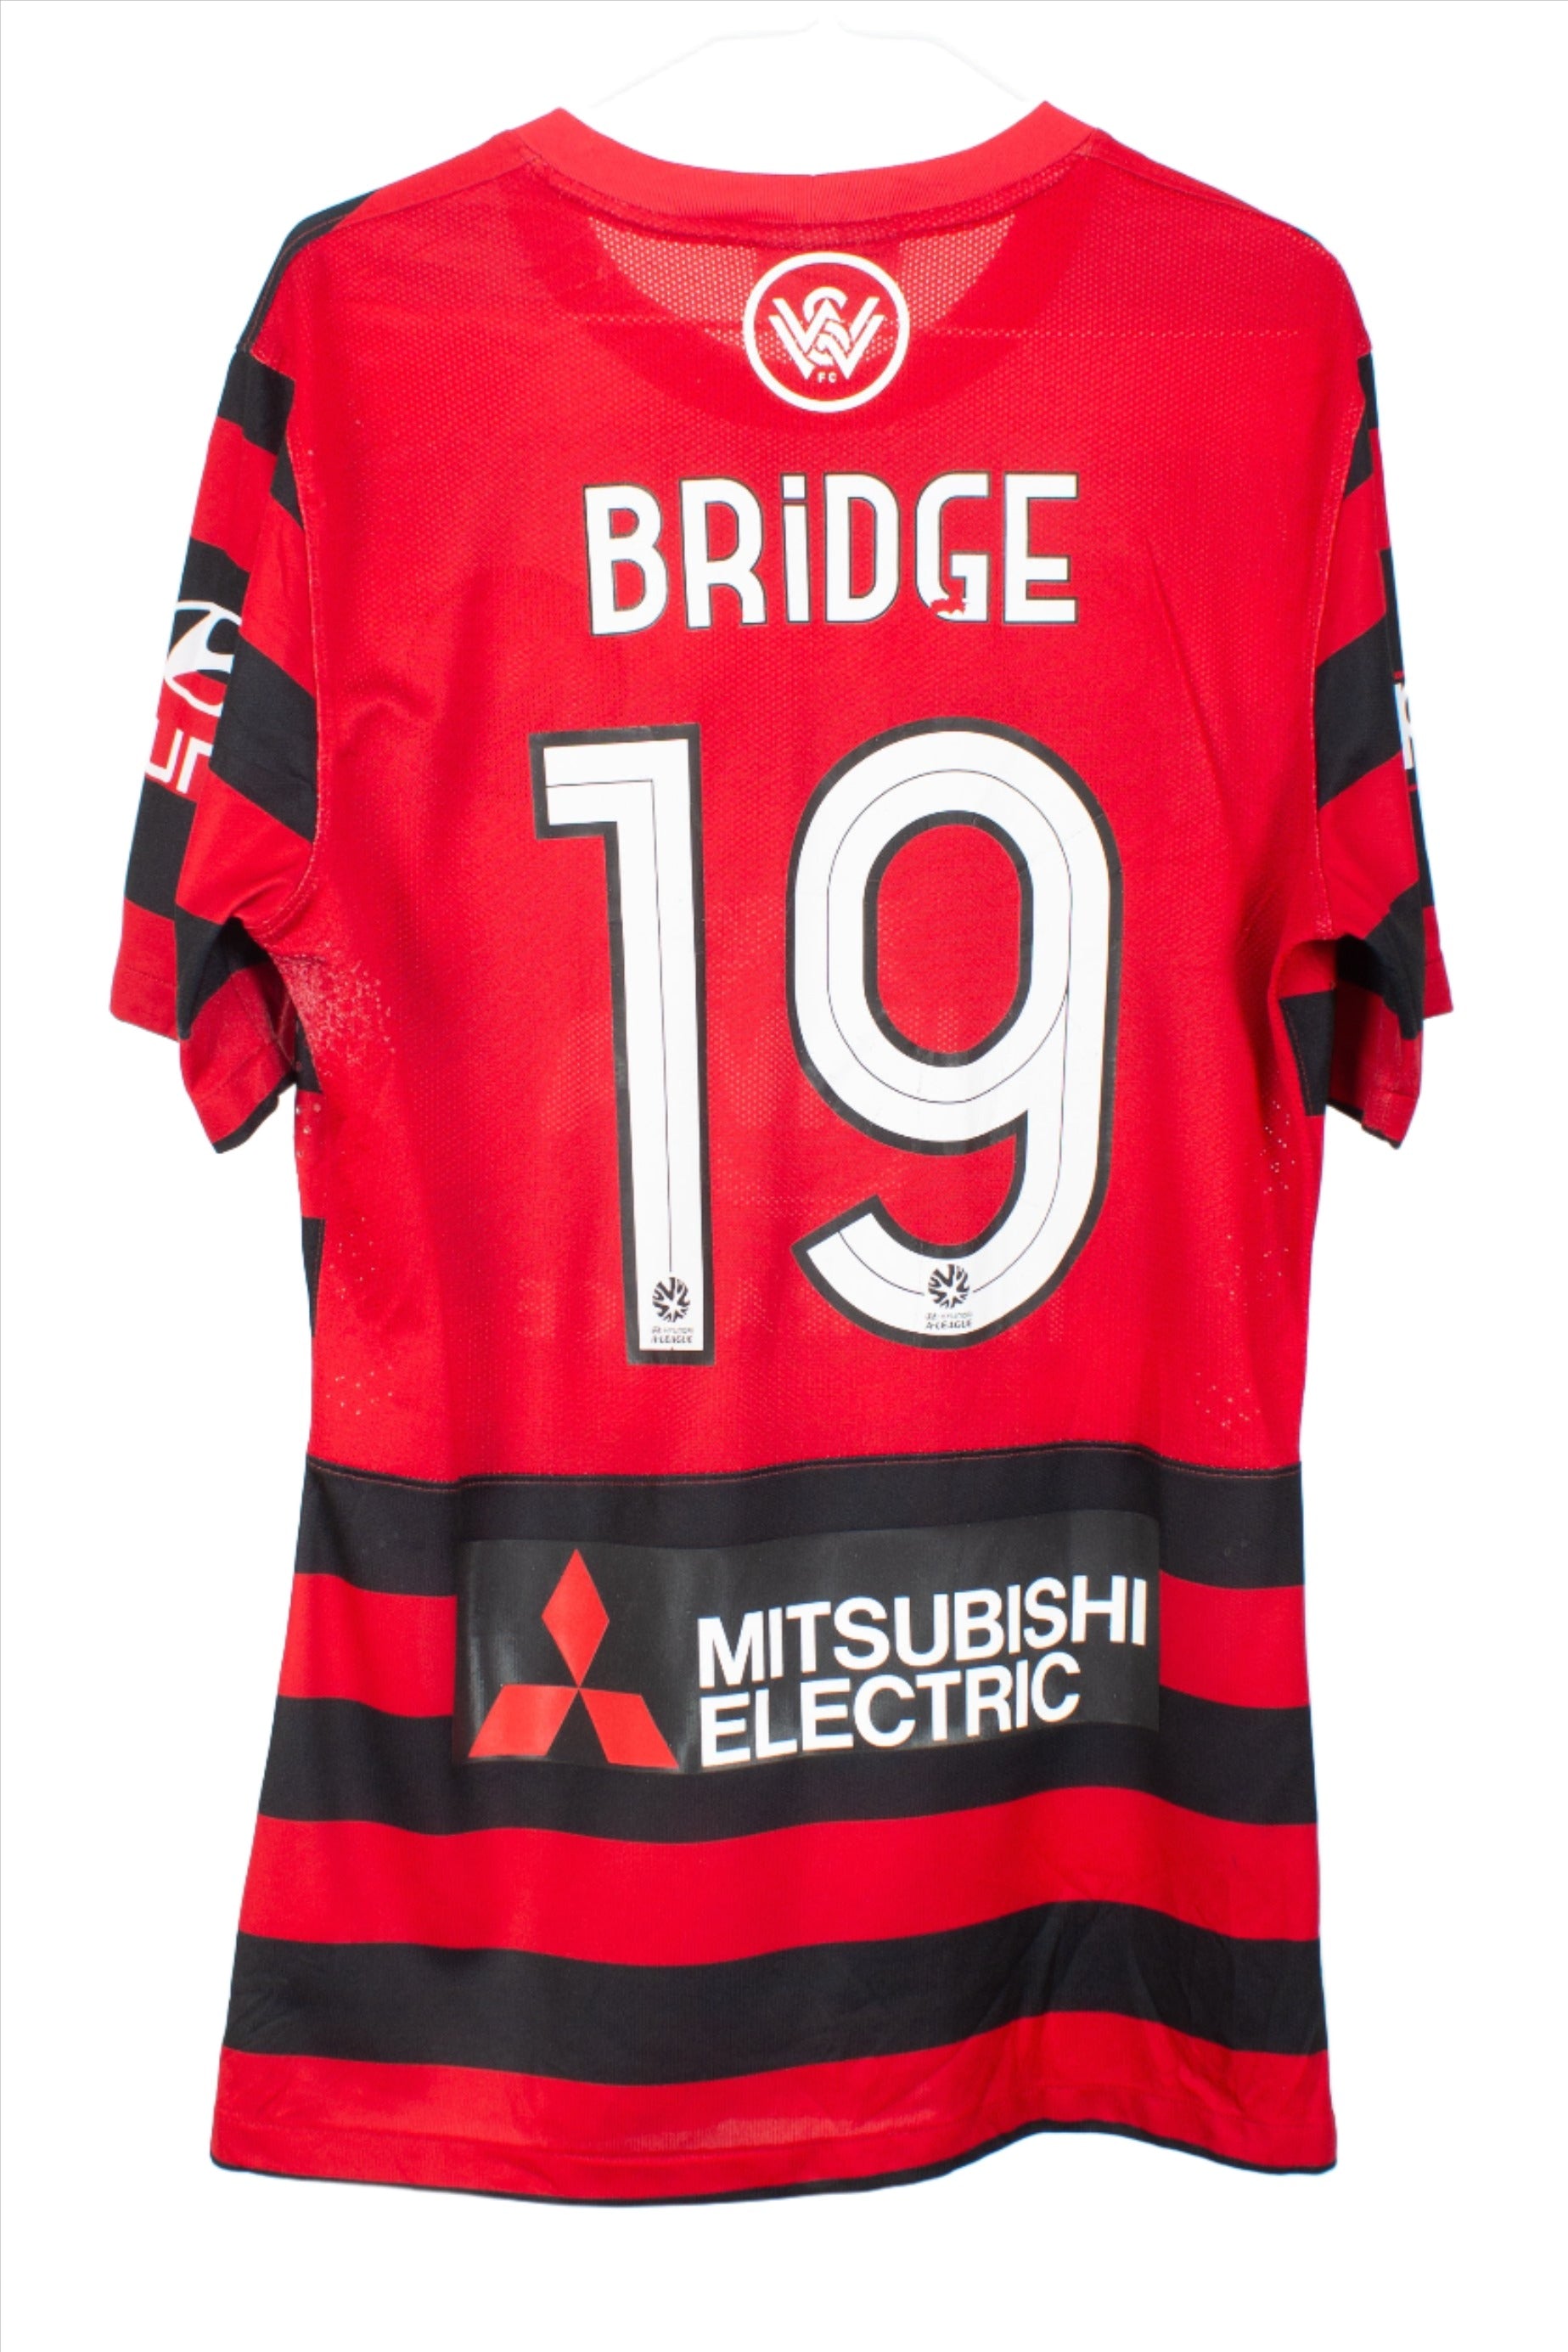 Western Sydney Wanderers 2014/15 *Match Worn* Home Shirt (Bridge #19) (M)